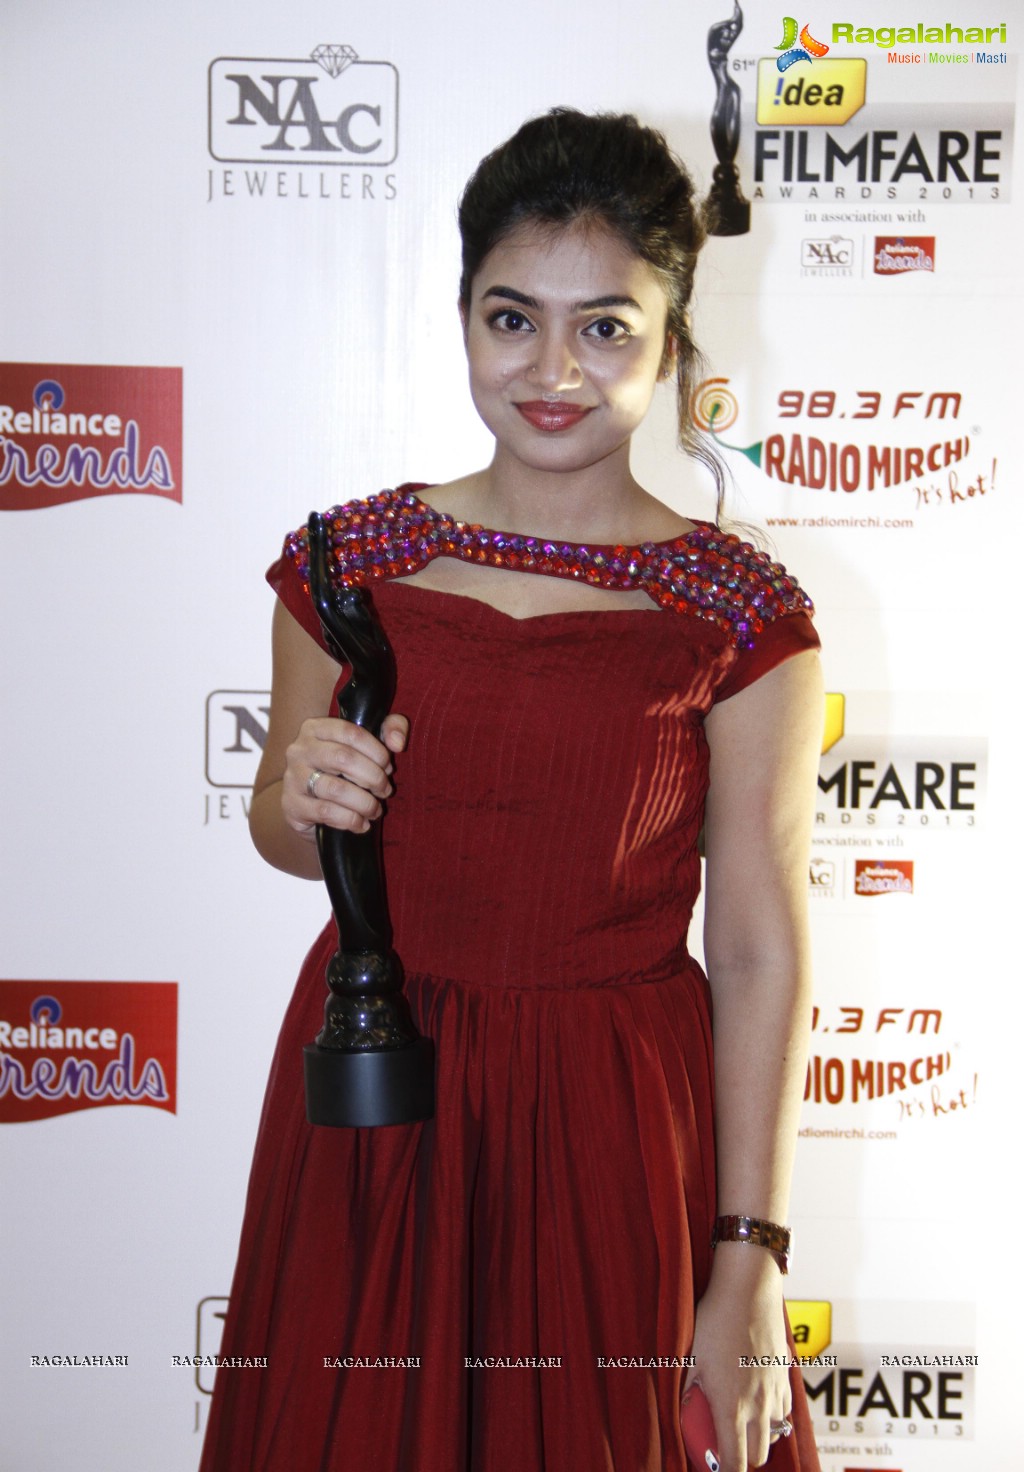 61st Idea Filmfare Awards 2013 South, Chennai